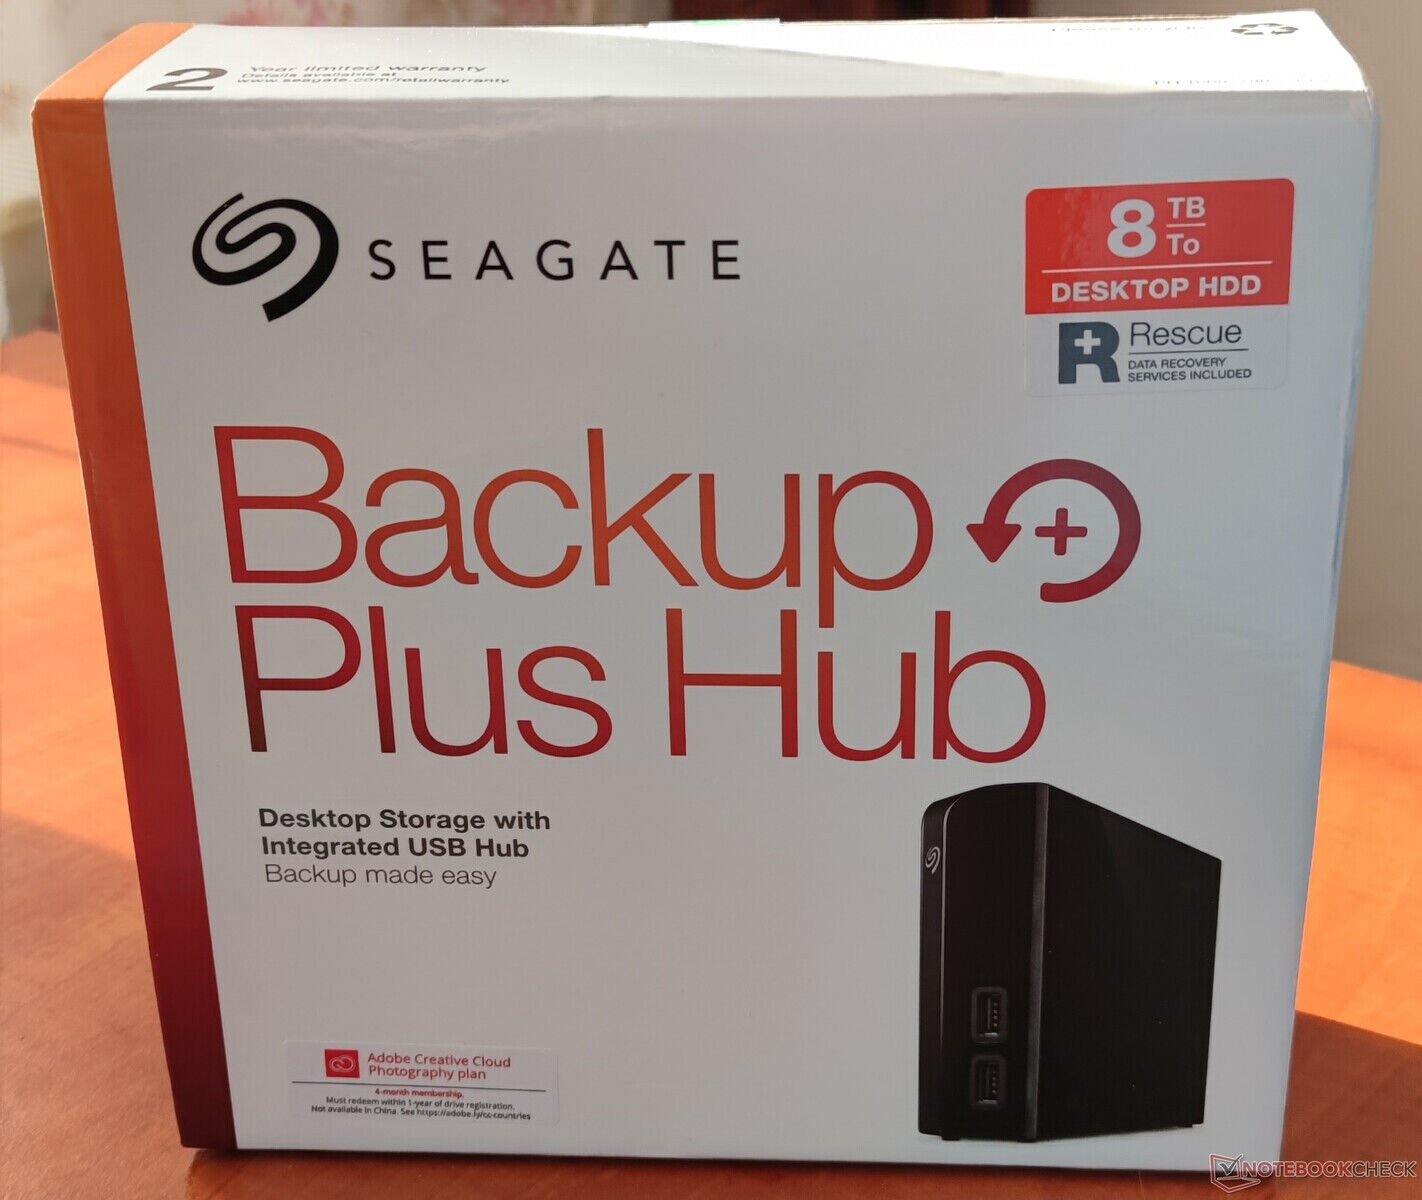 Seagate 8TB Backup Plus Hub External Hard Drive